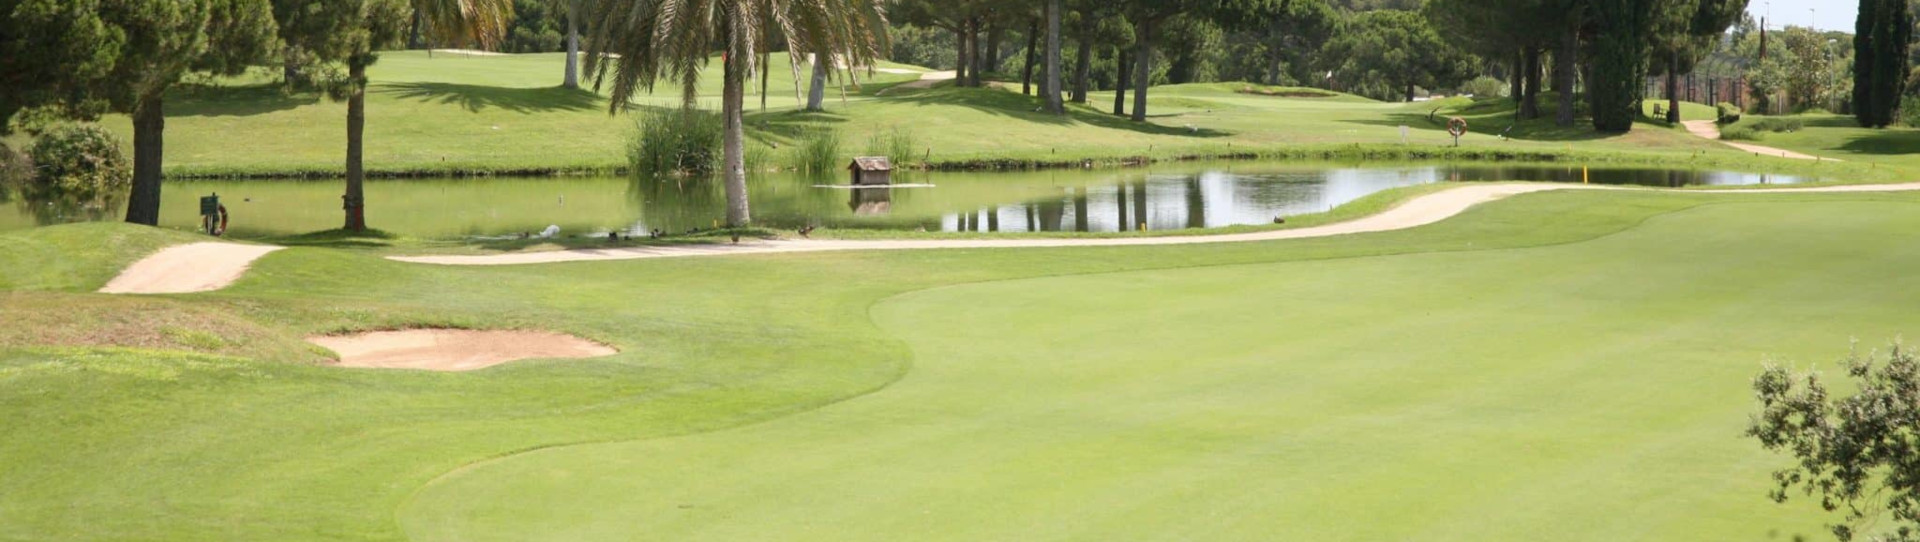 Spain golf holidays - Barcelona 5 Golf Courses Golf Pass - Photo 1